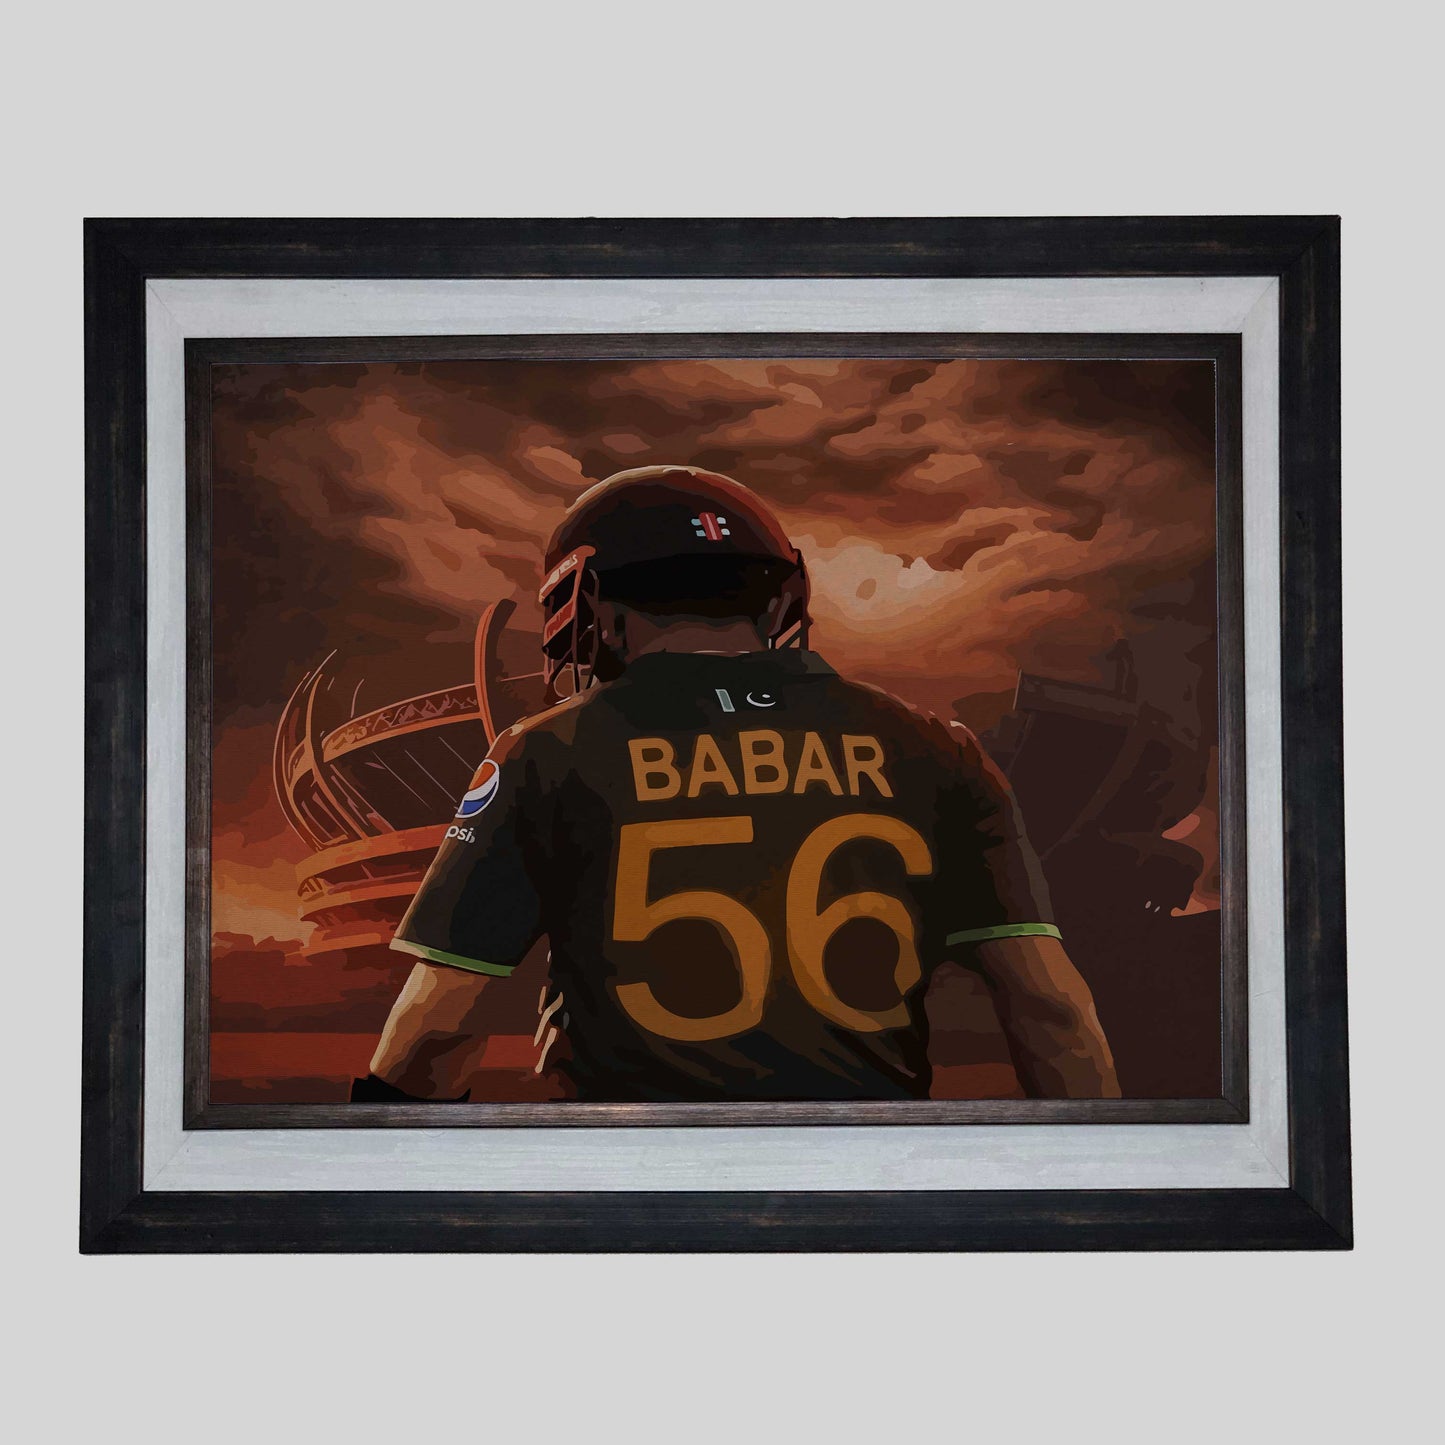 Babar's Aftermath Art Portrait Trendy Home